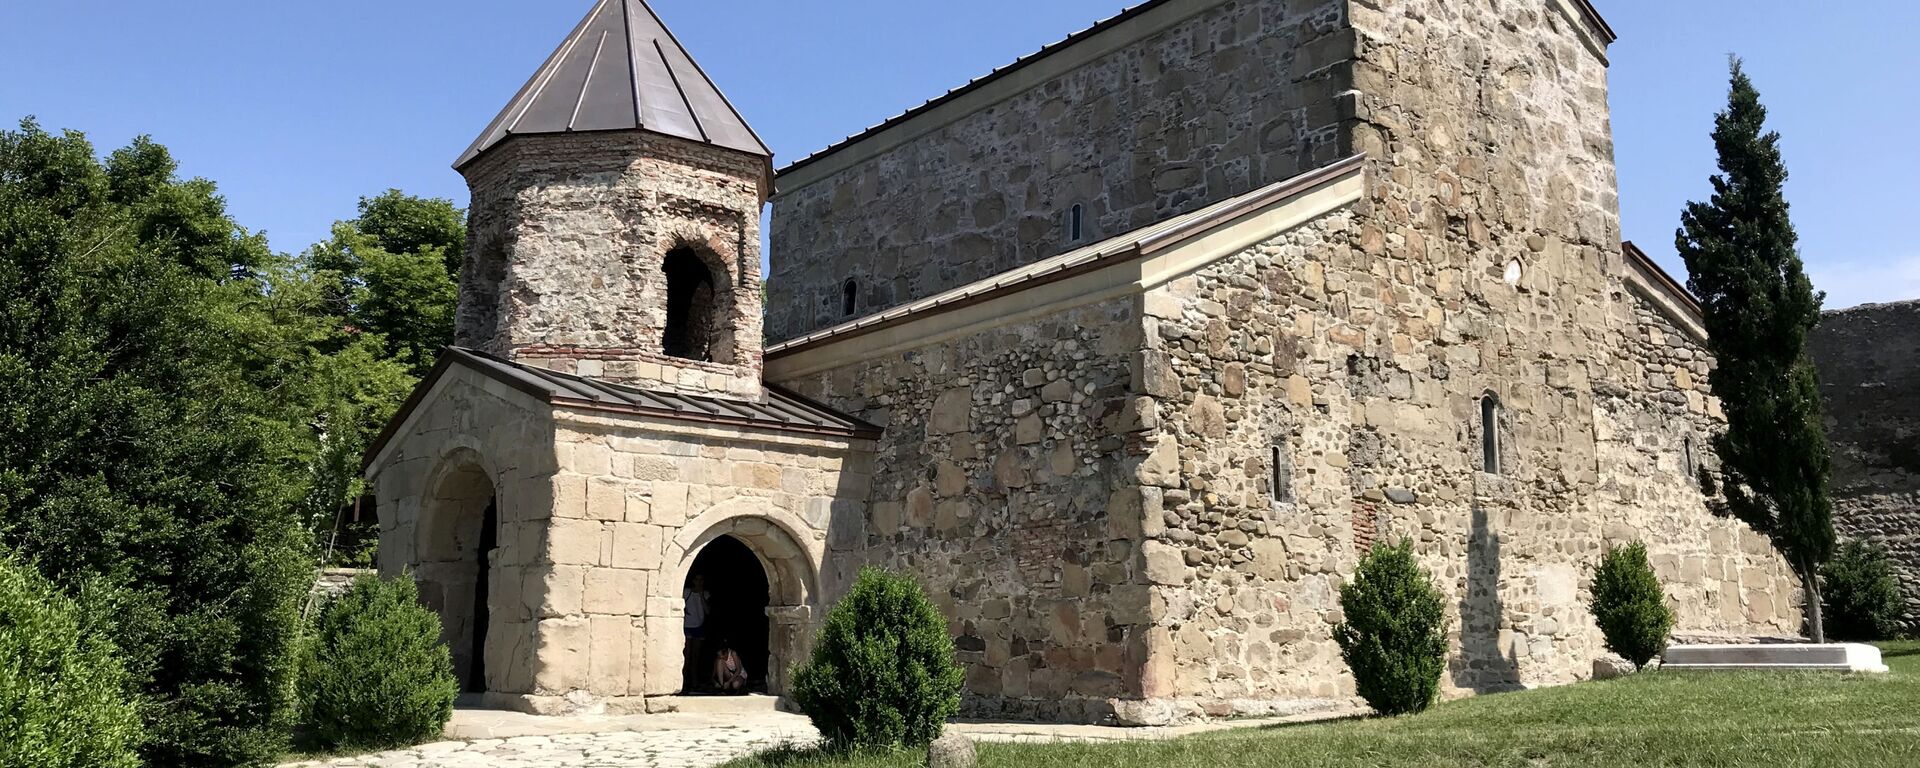 Зедазенский монастырь - Sputnik Грузия, 1920, 11.08.2019